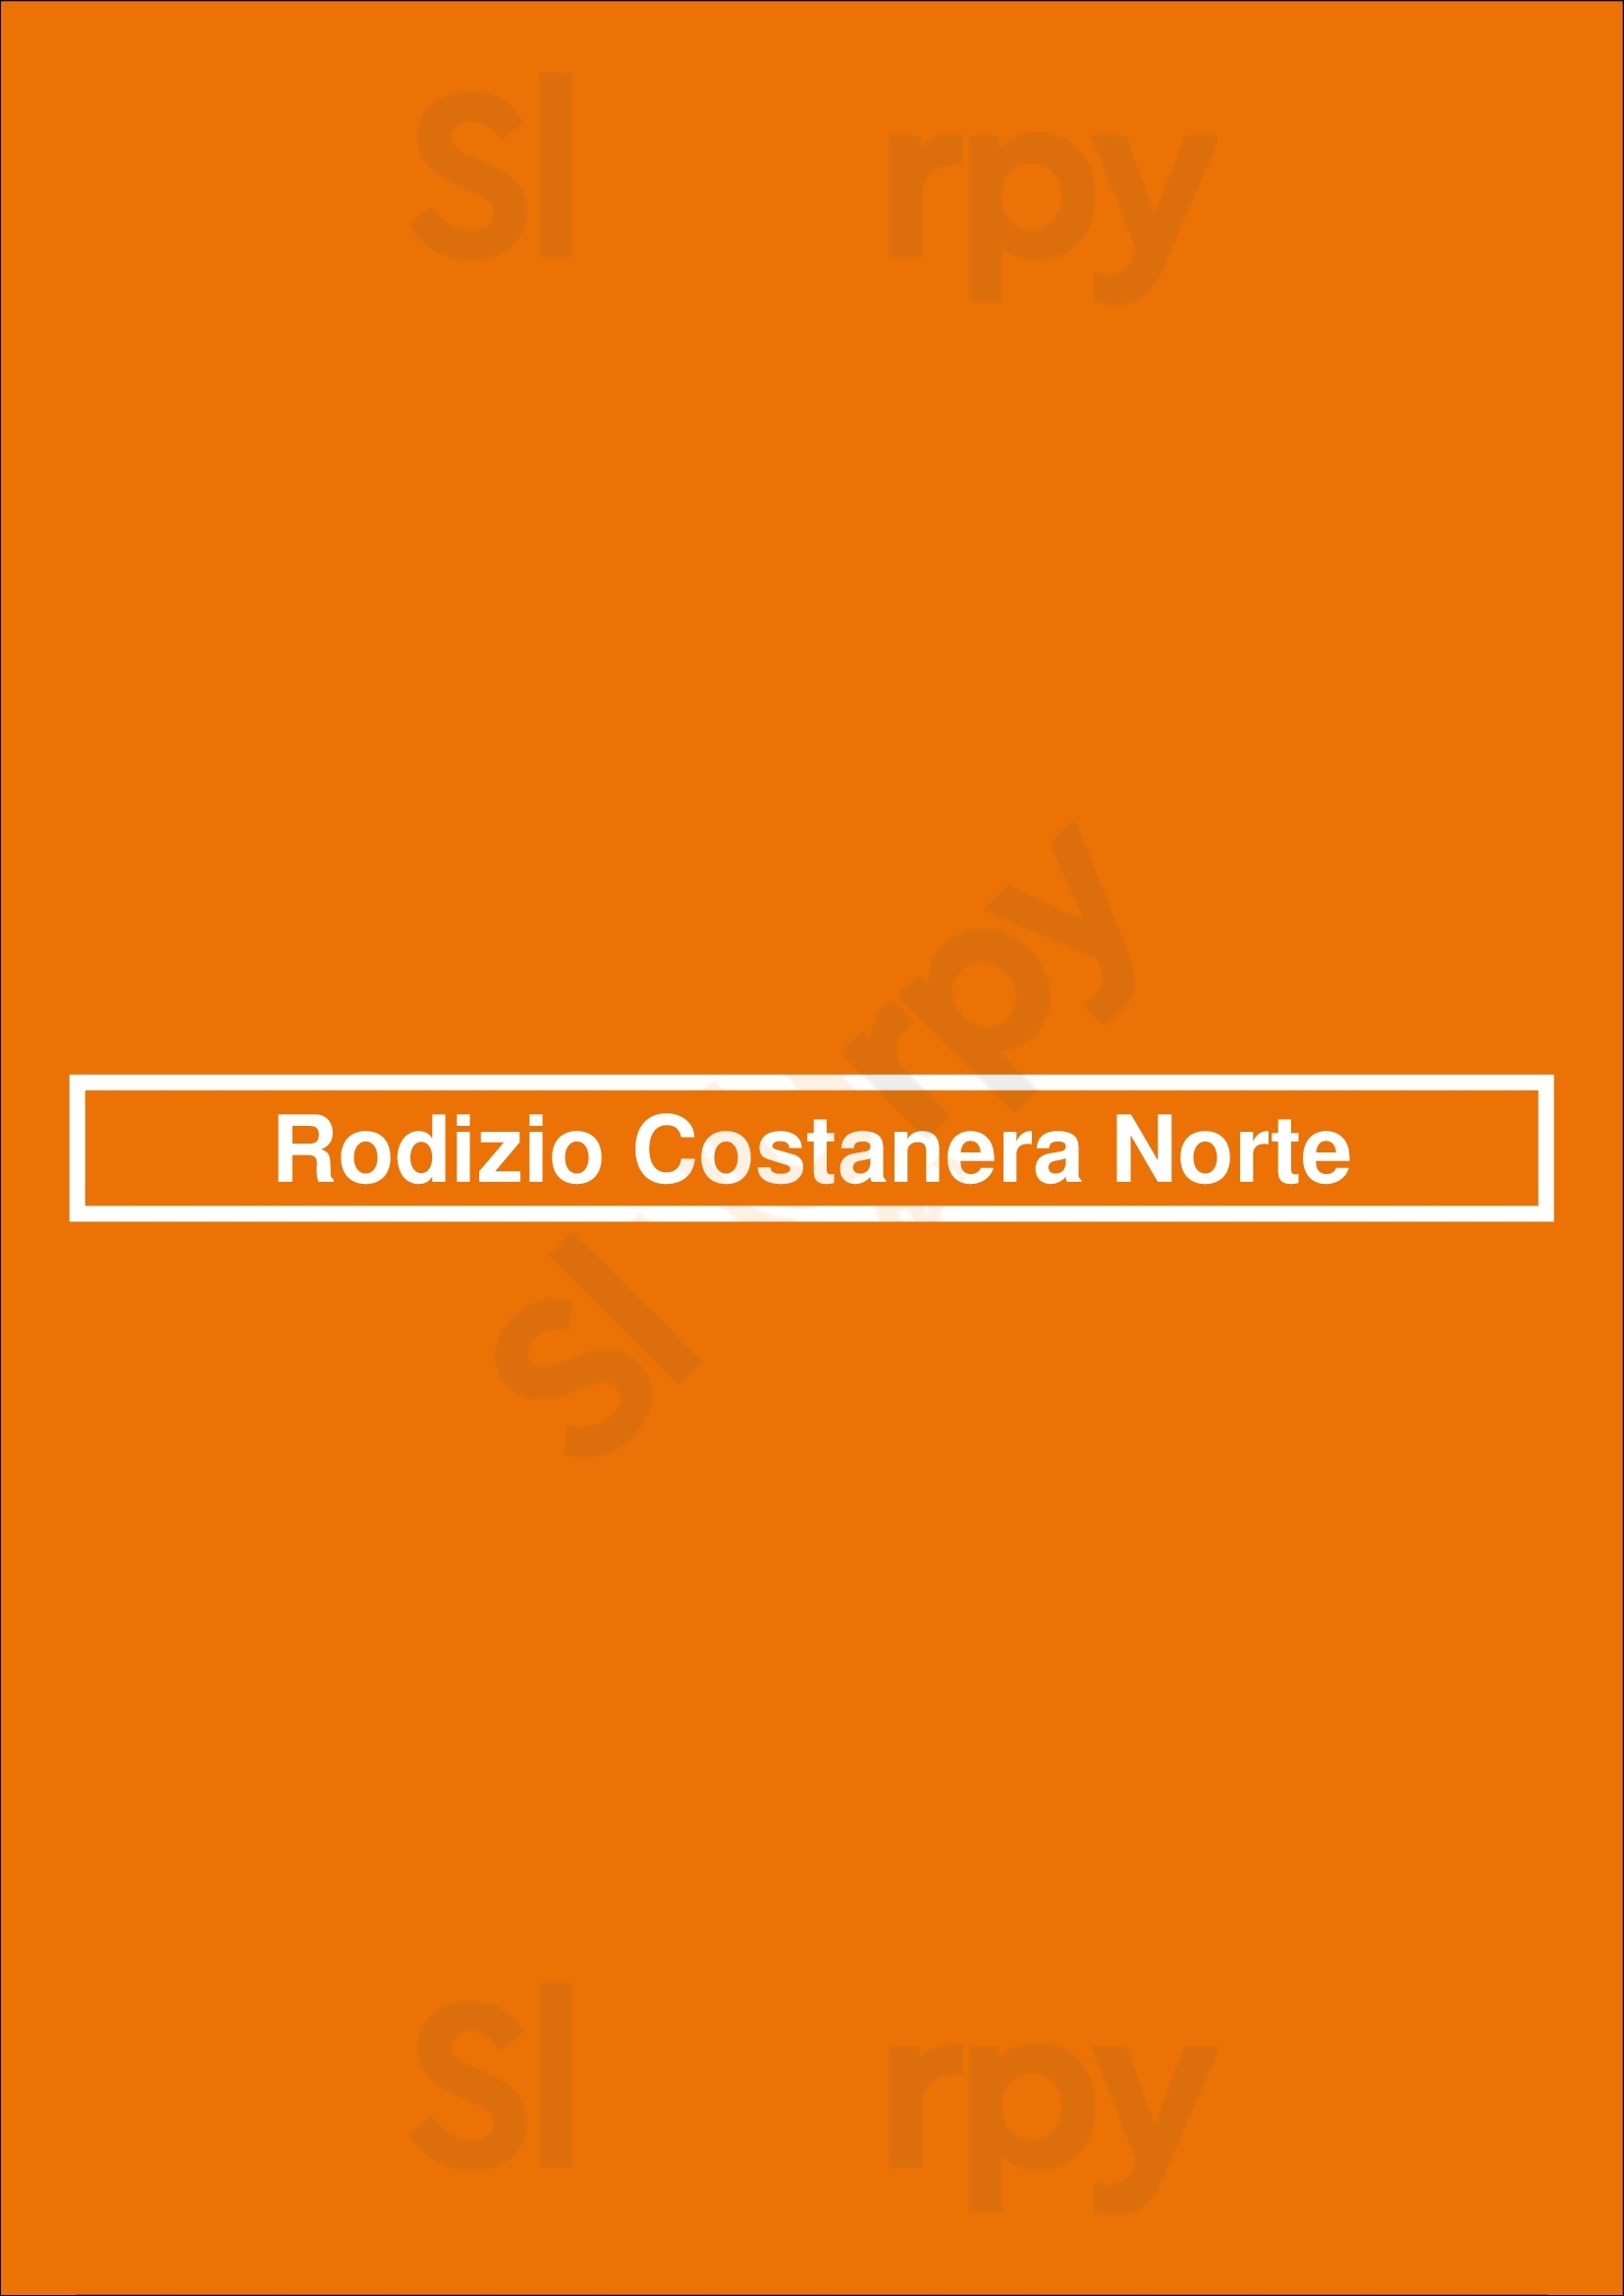 Rodizio Costanera Norte Buenos Aires Menu - 1